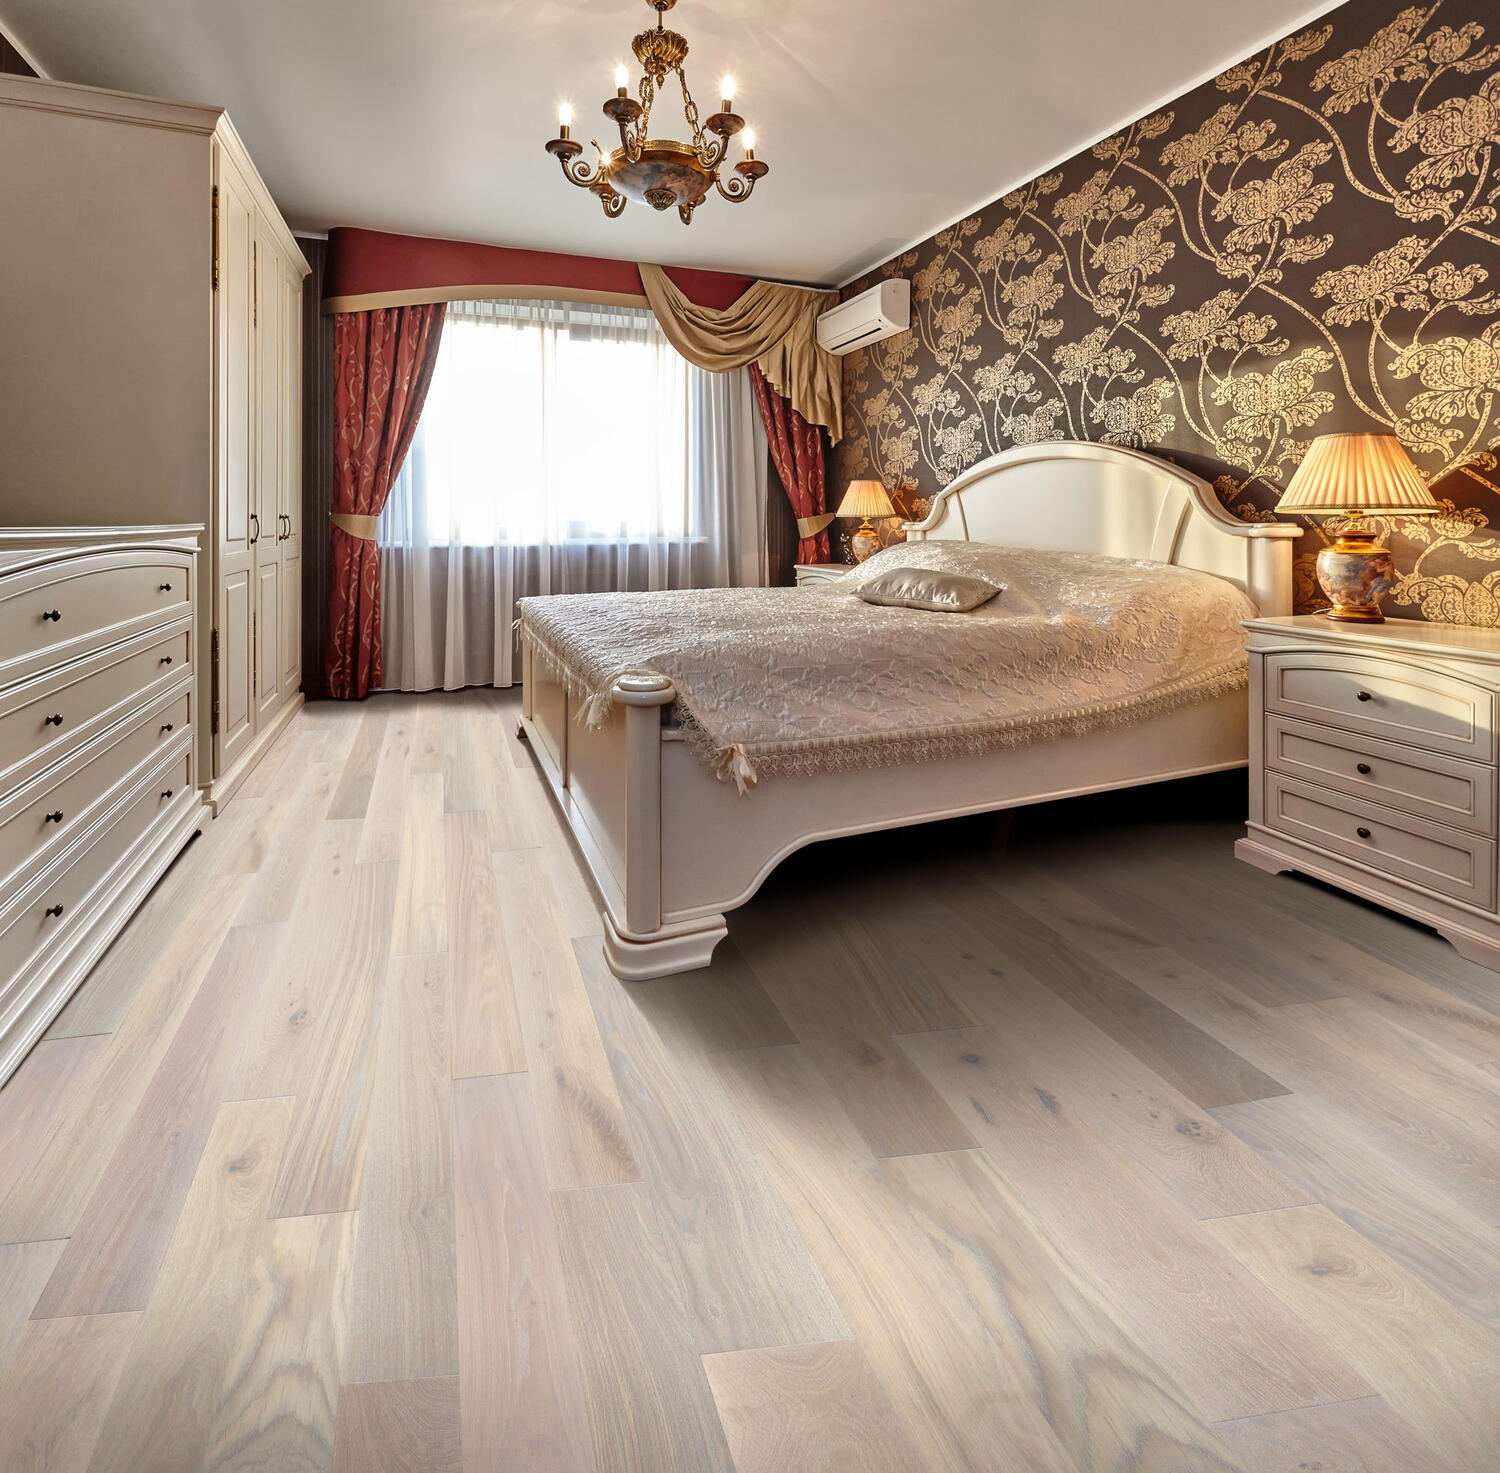 Parchet alb, din lemn, in dormitor elegant